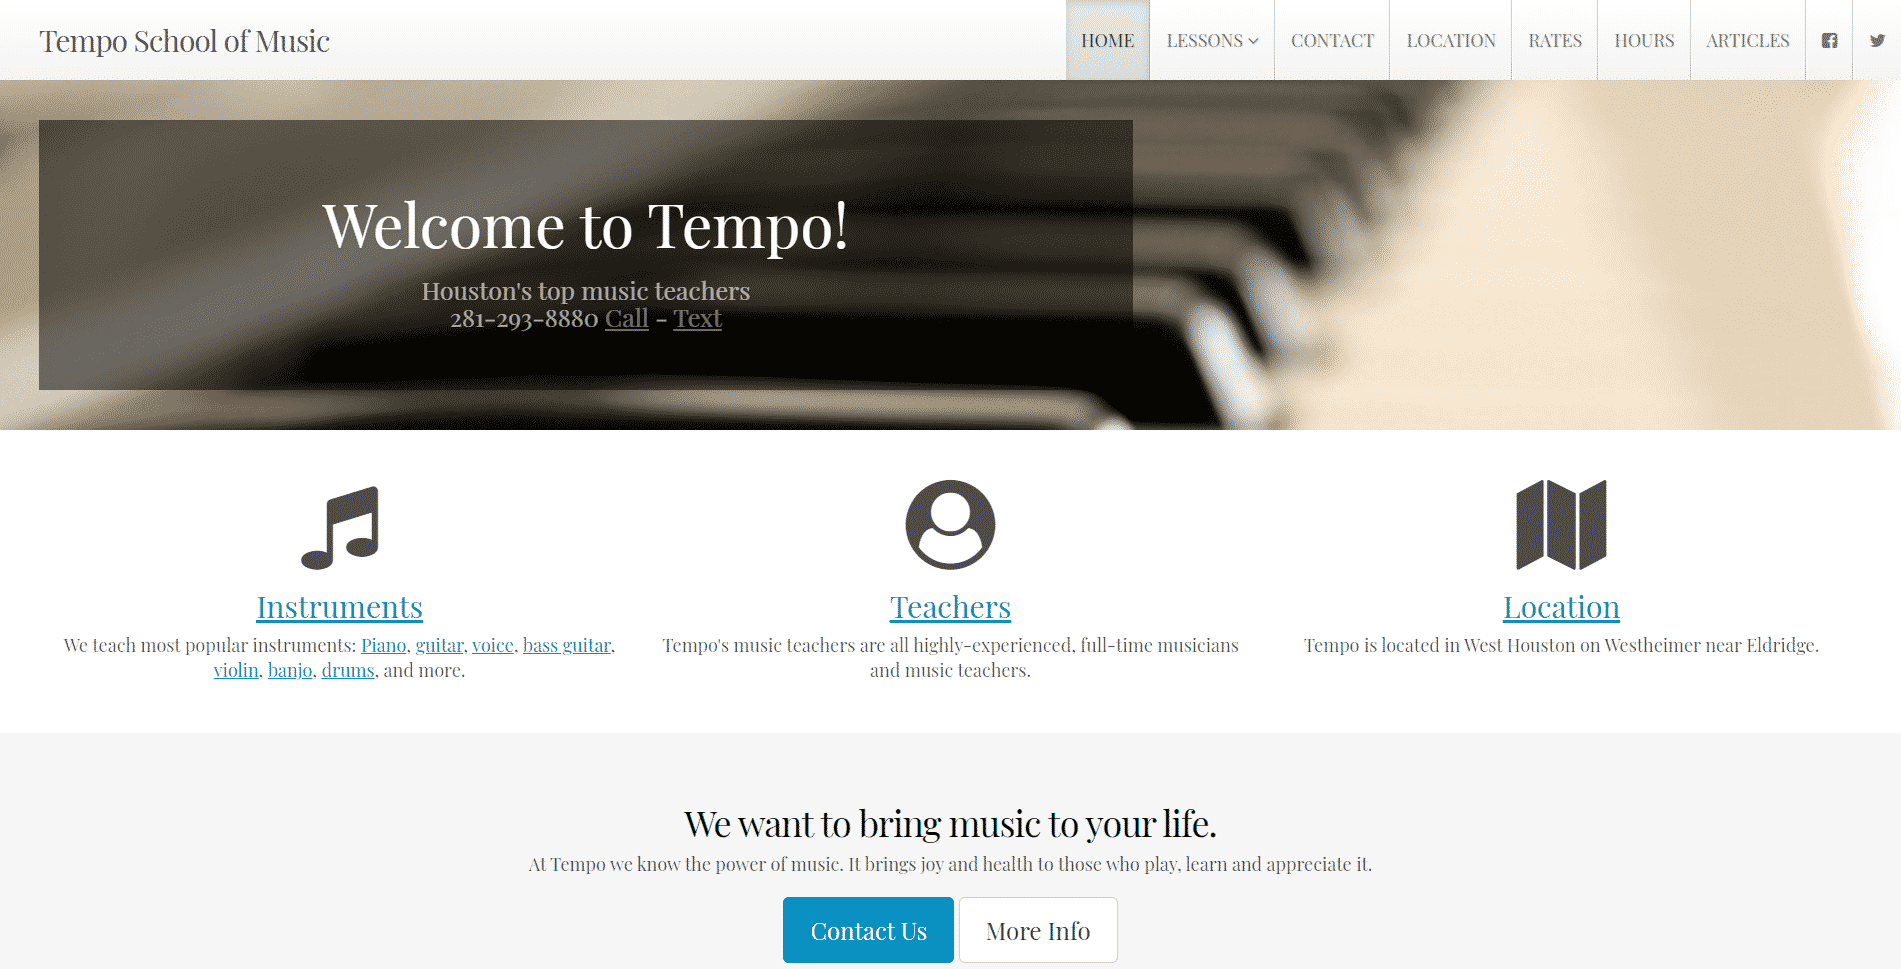 Tempo School of Music